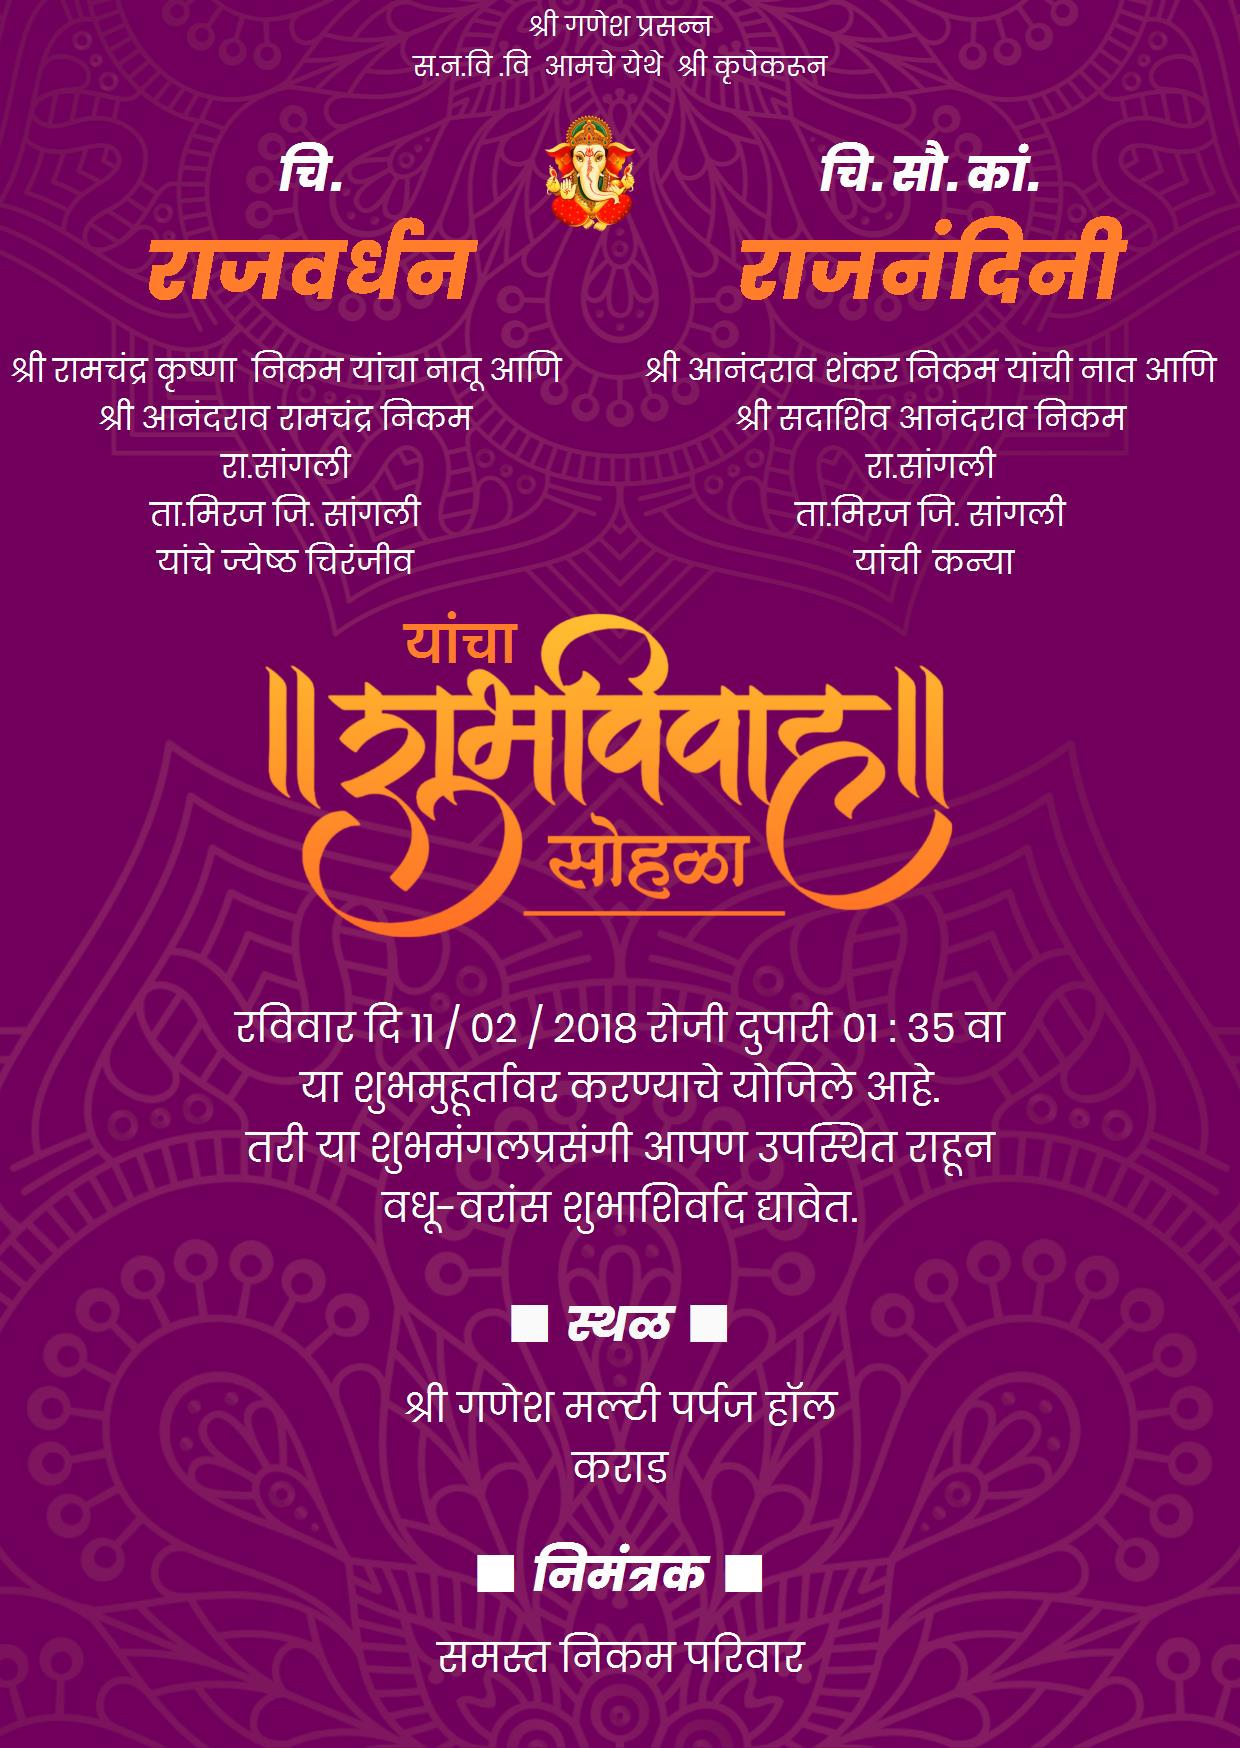 Online editable wedding invitation card in marathi